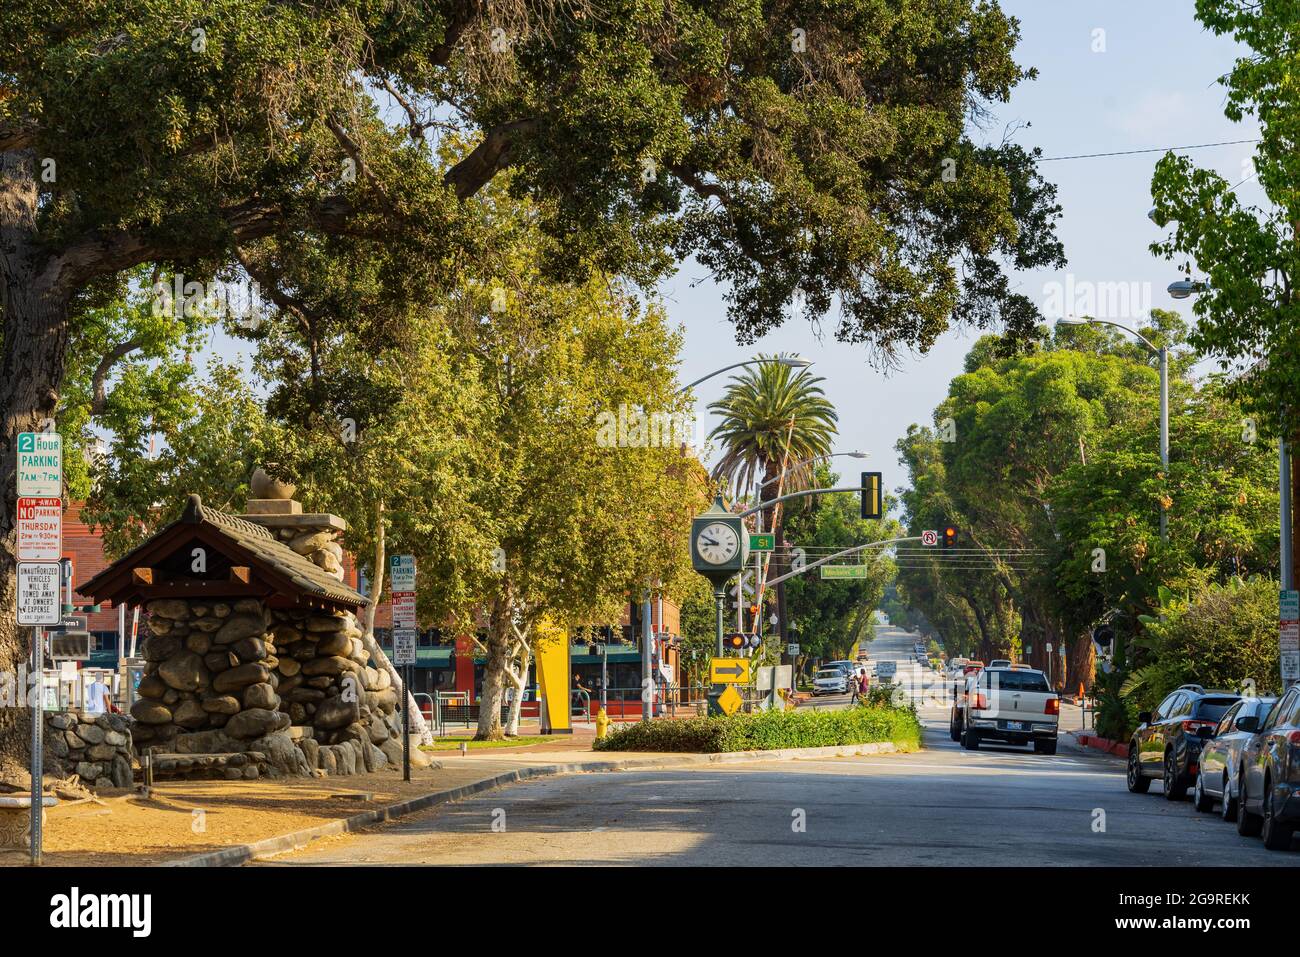 Los Angeles, 25 LUGLIO 2021 - Vista soleggiata del paesaggio urbano di South Pasadena Foto Stock